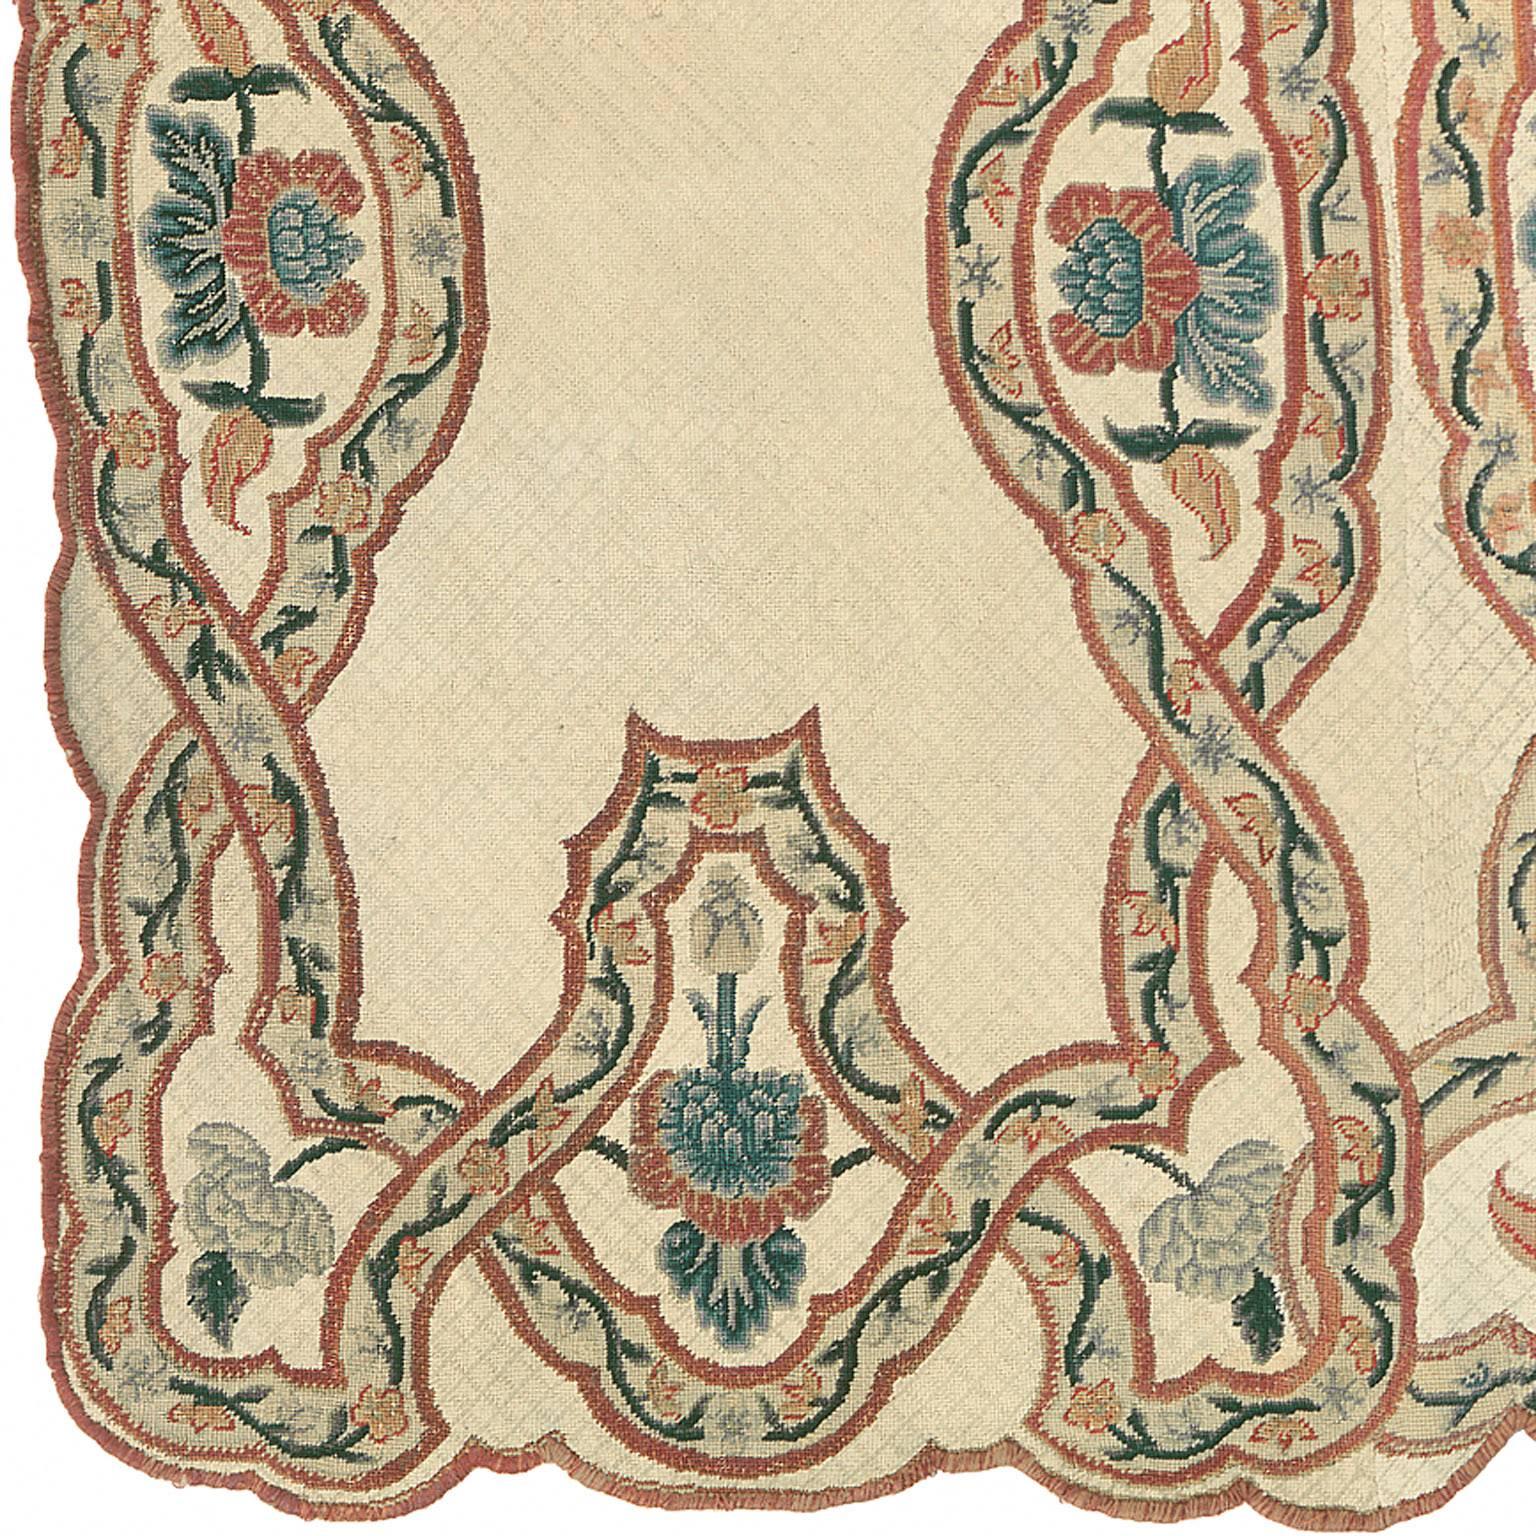 French embroidery carpet, Louis XVI period.